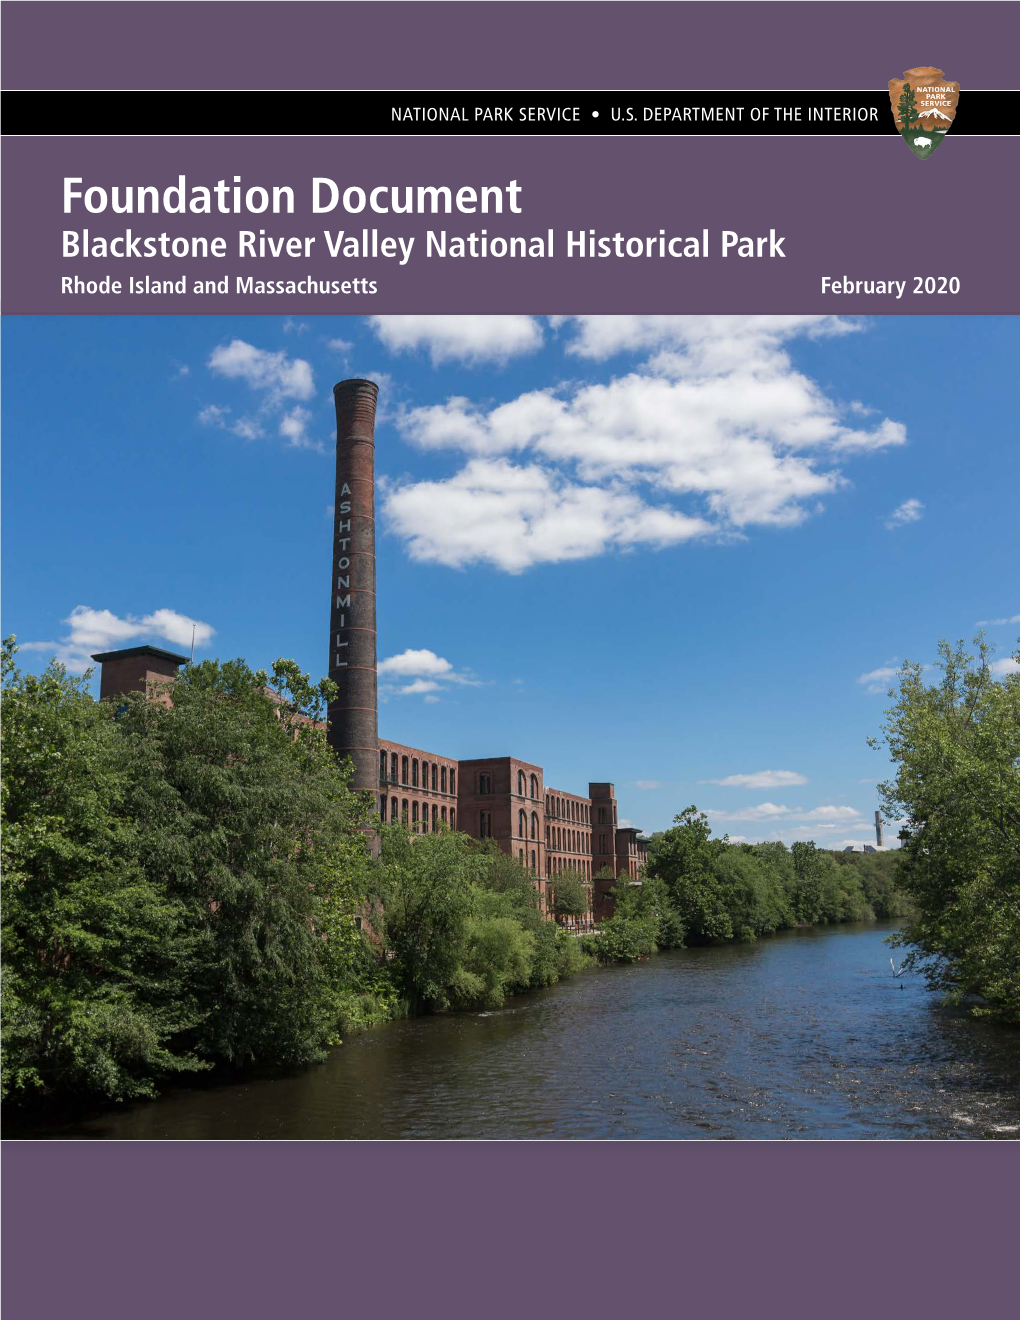 Blackstone River Valley National Historical Park Foundation Document